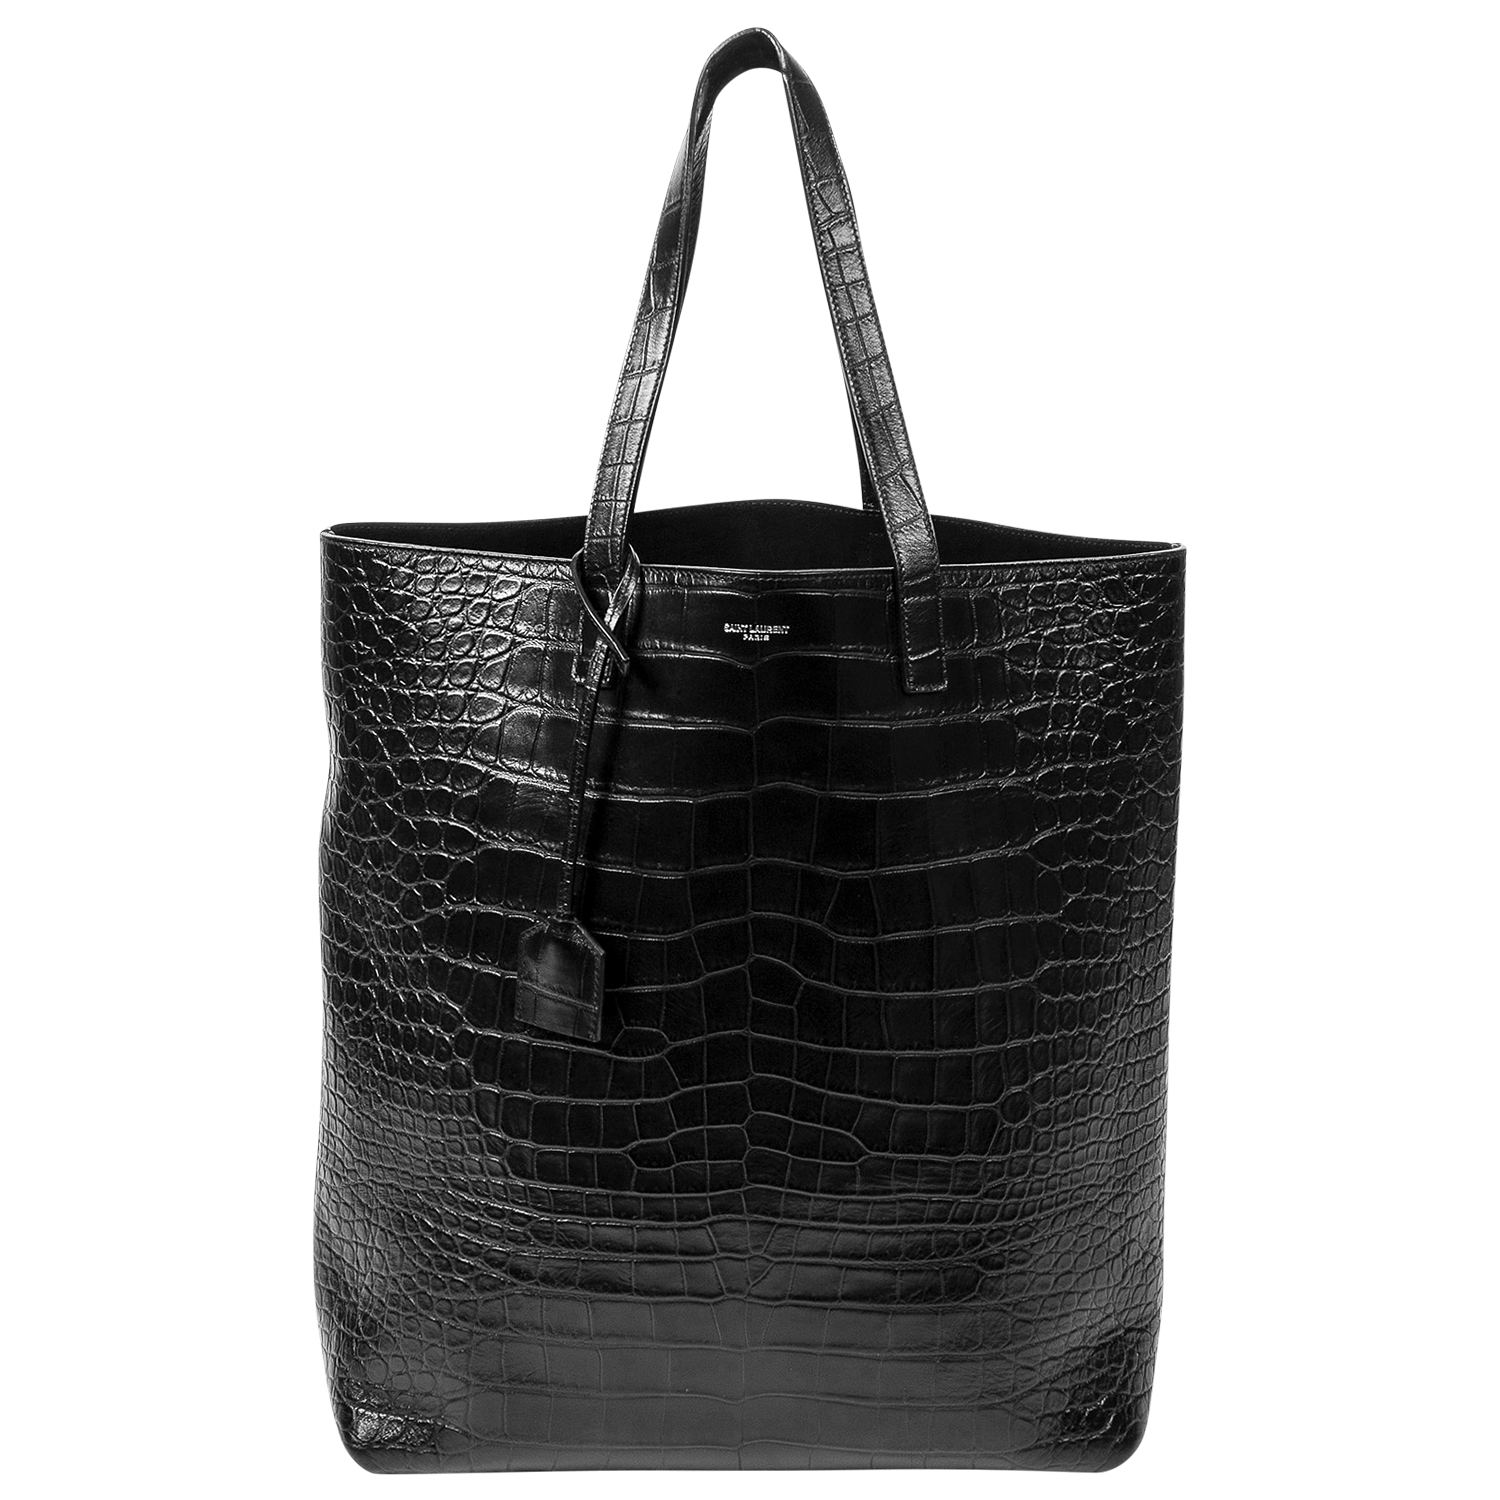 Yves Saint Laurent College Going Handbags at Rs 2750/piece | Handbags in  Delhi | ID: 21458383691